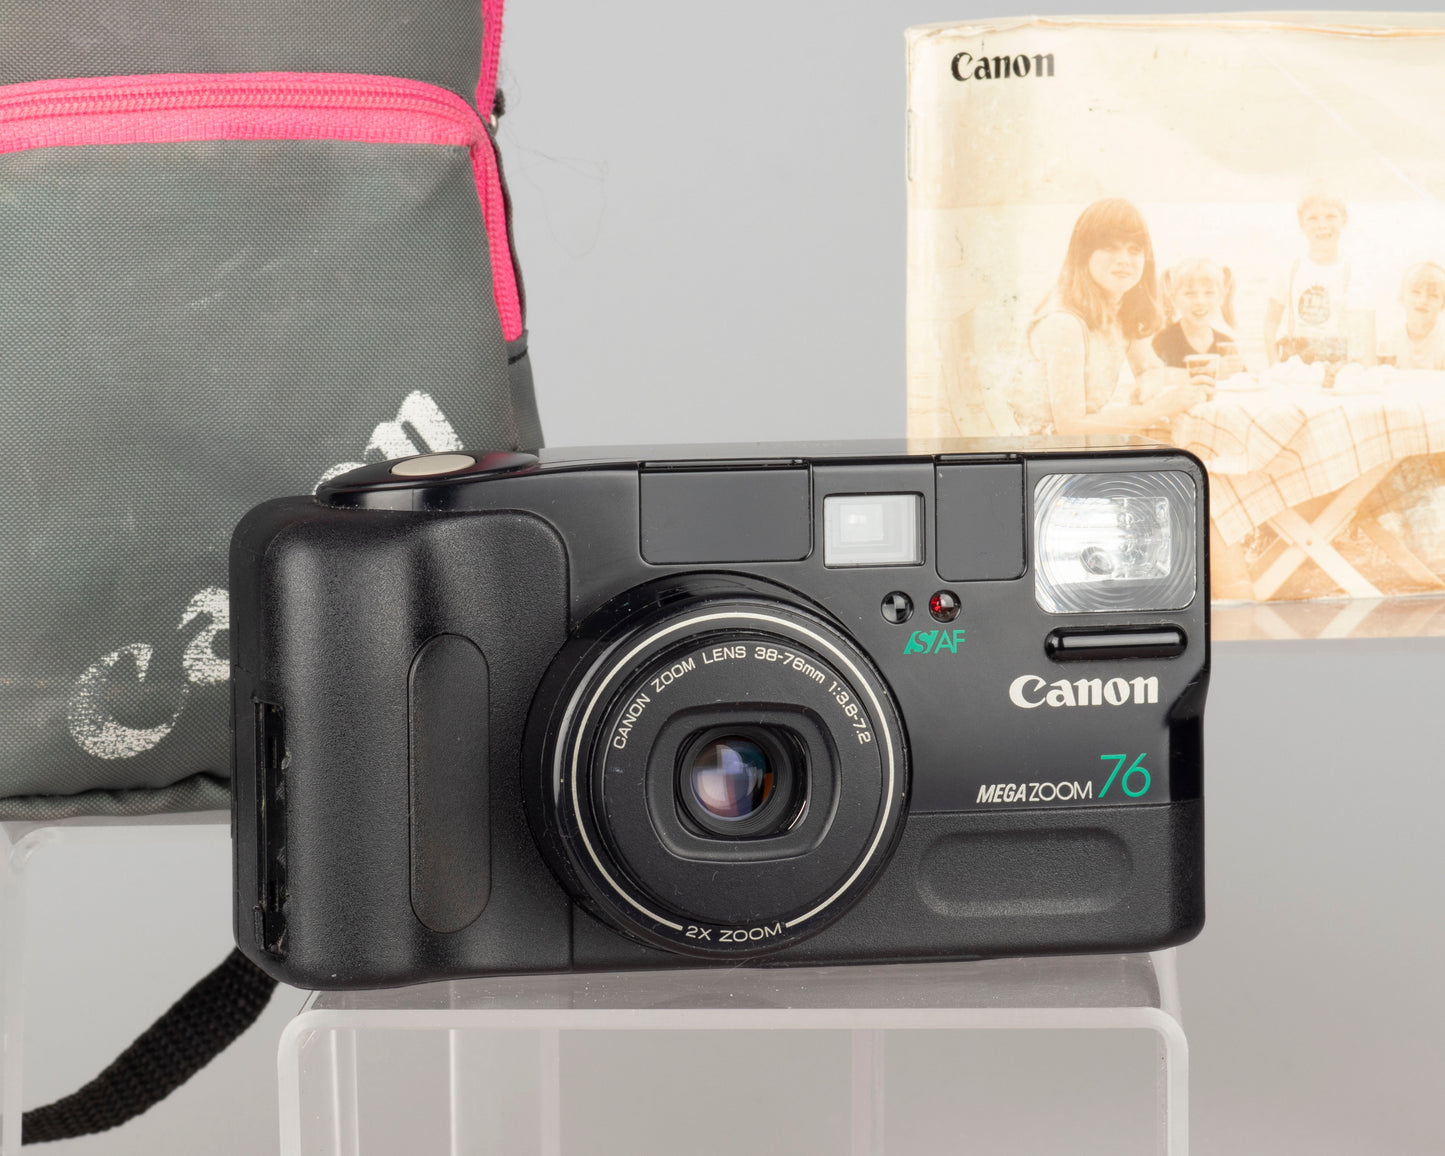 Canon Sure Shot Mega Zoom 76 35mm camera